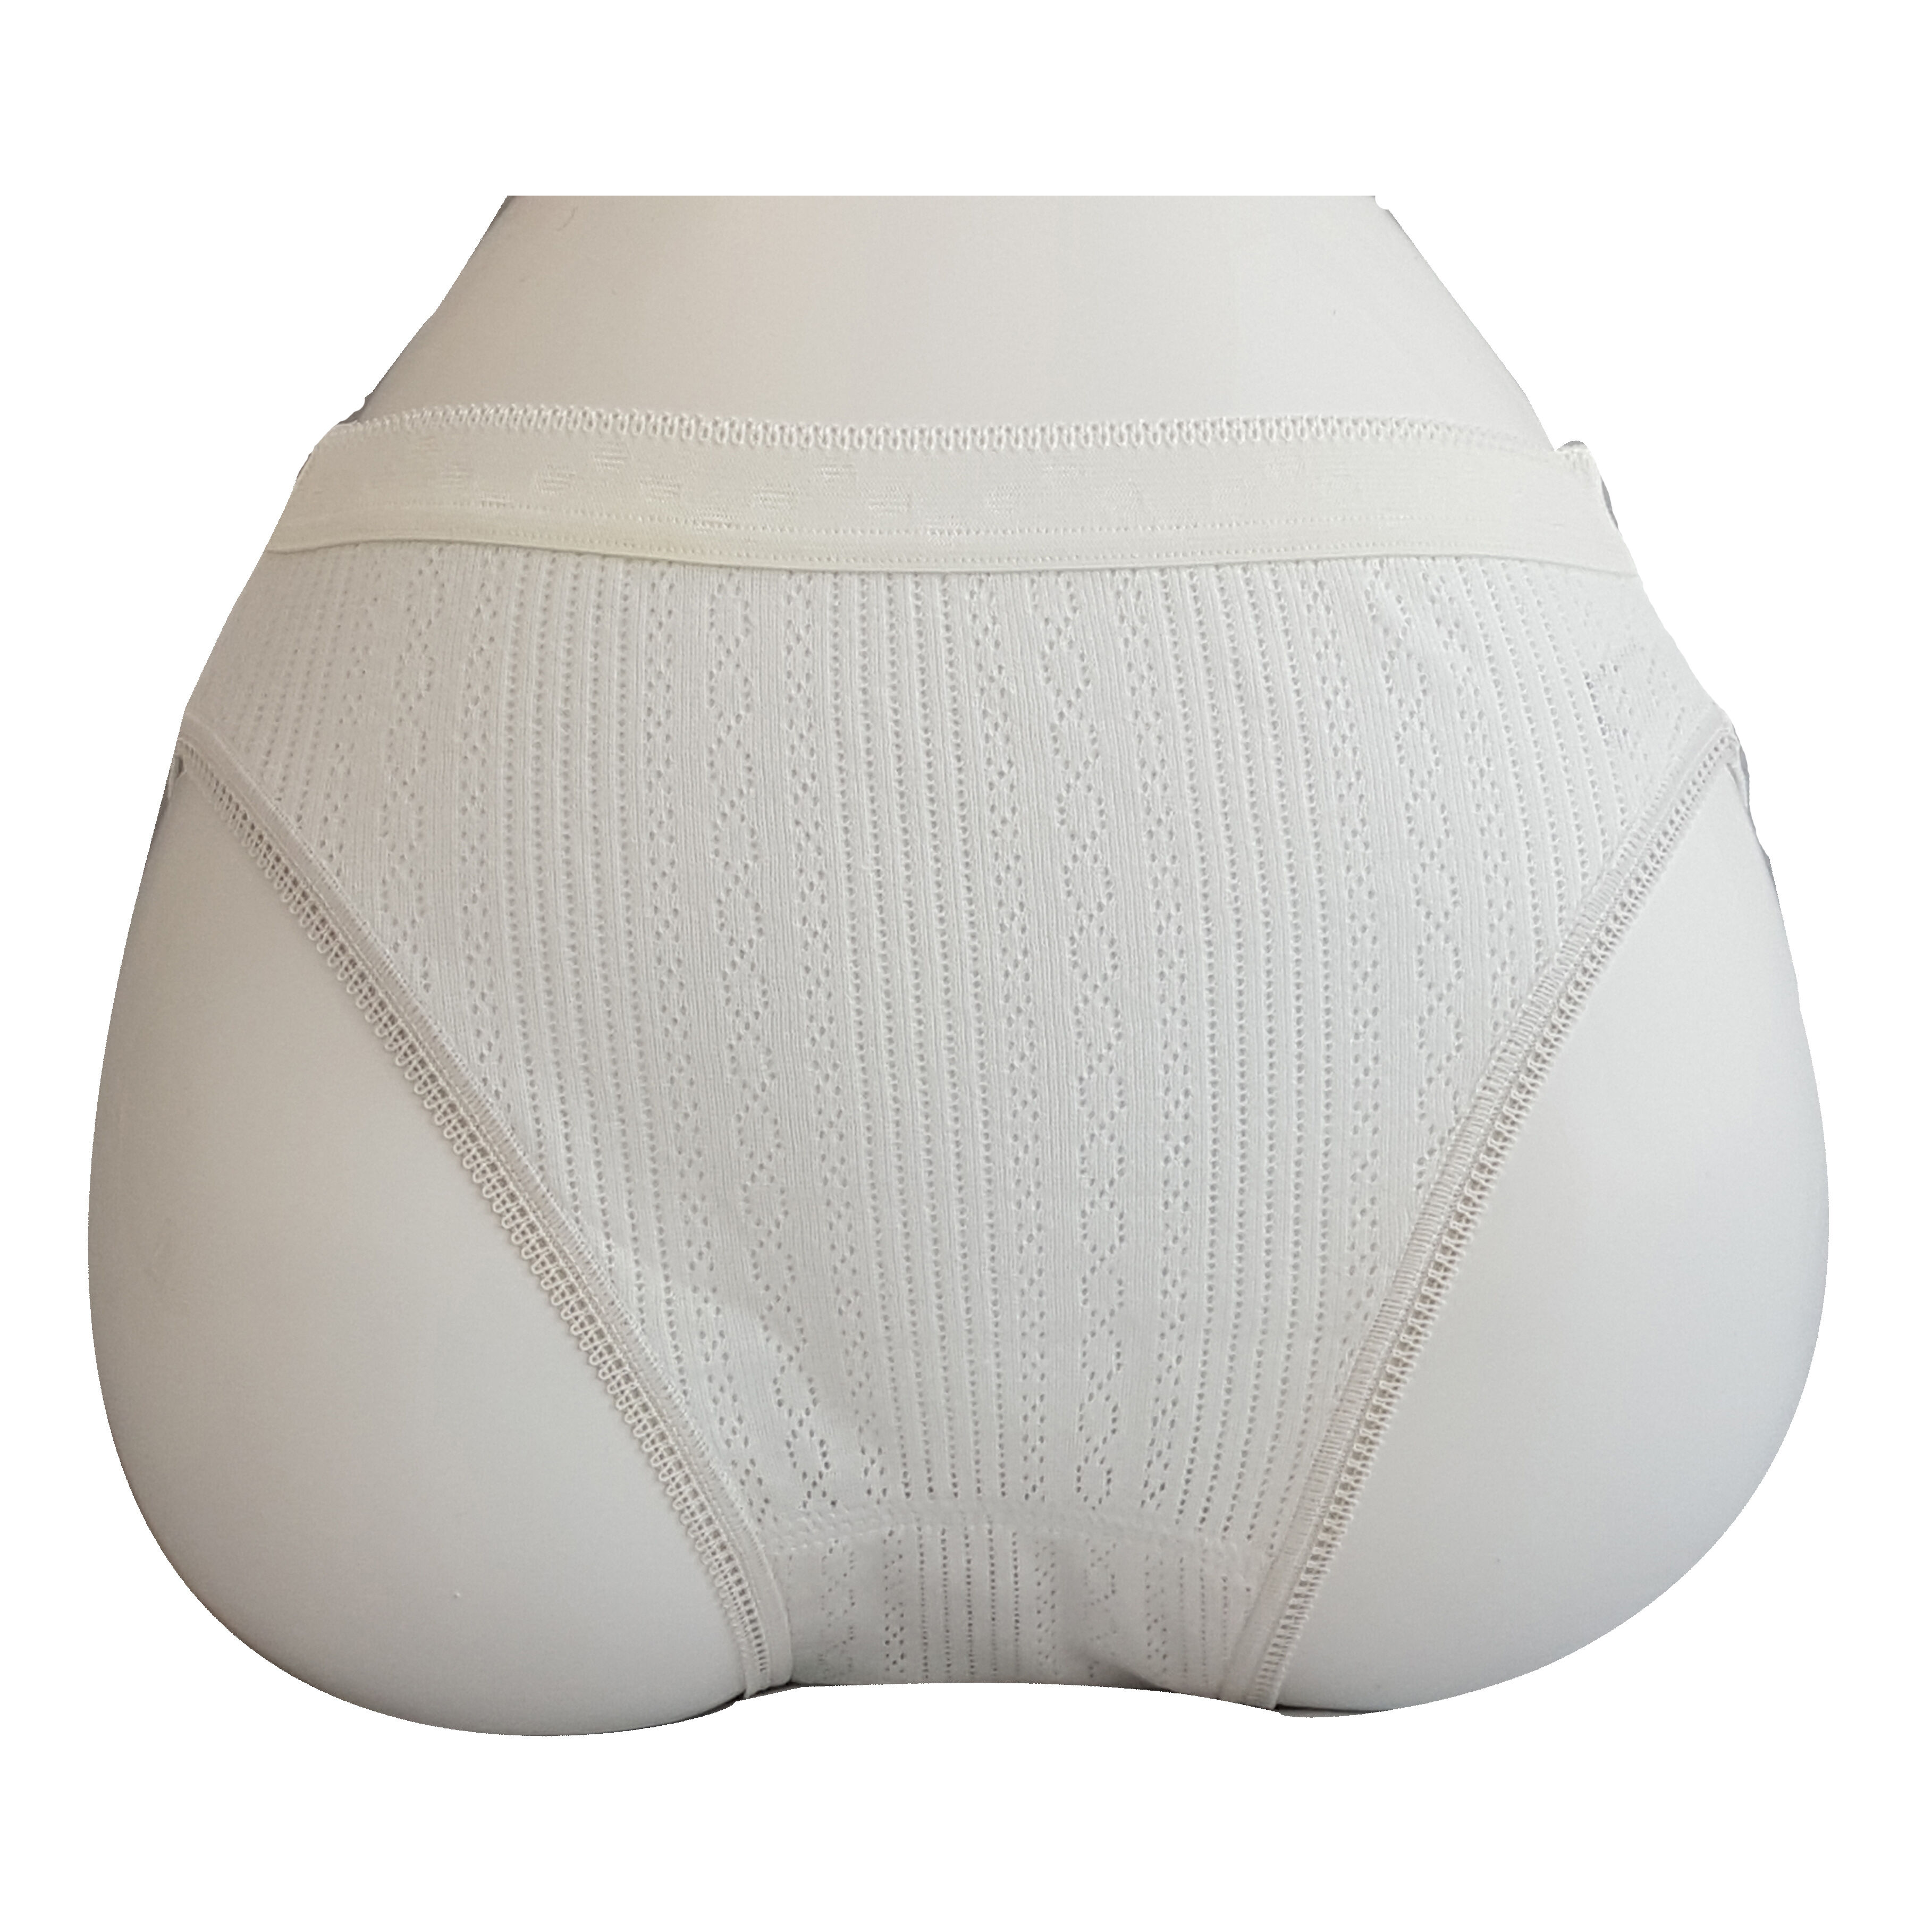 higienic pants sangallo lady mutande igieniche bianco 2